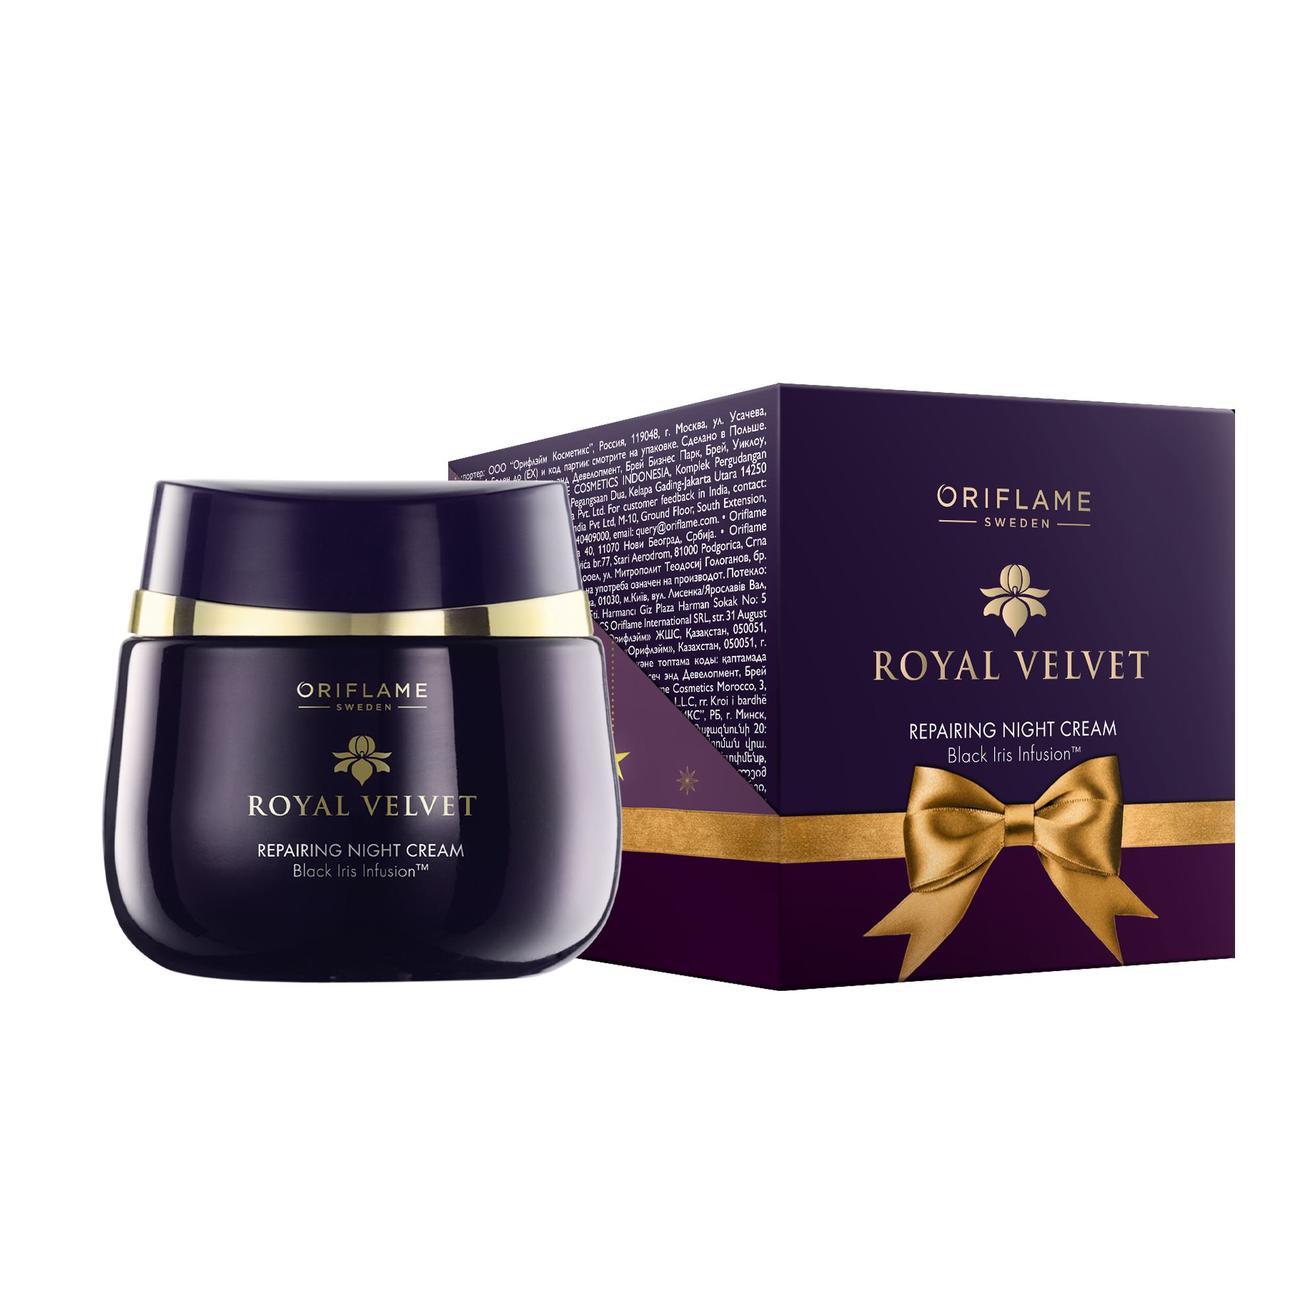 Aanbieding van Limited-Edition Royal Velvet Repairing Night Cream voor 27,99€ bij Oriflame